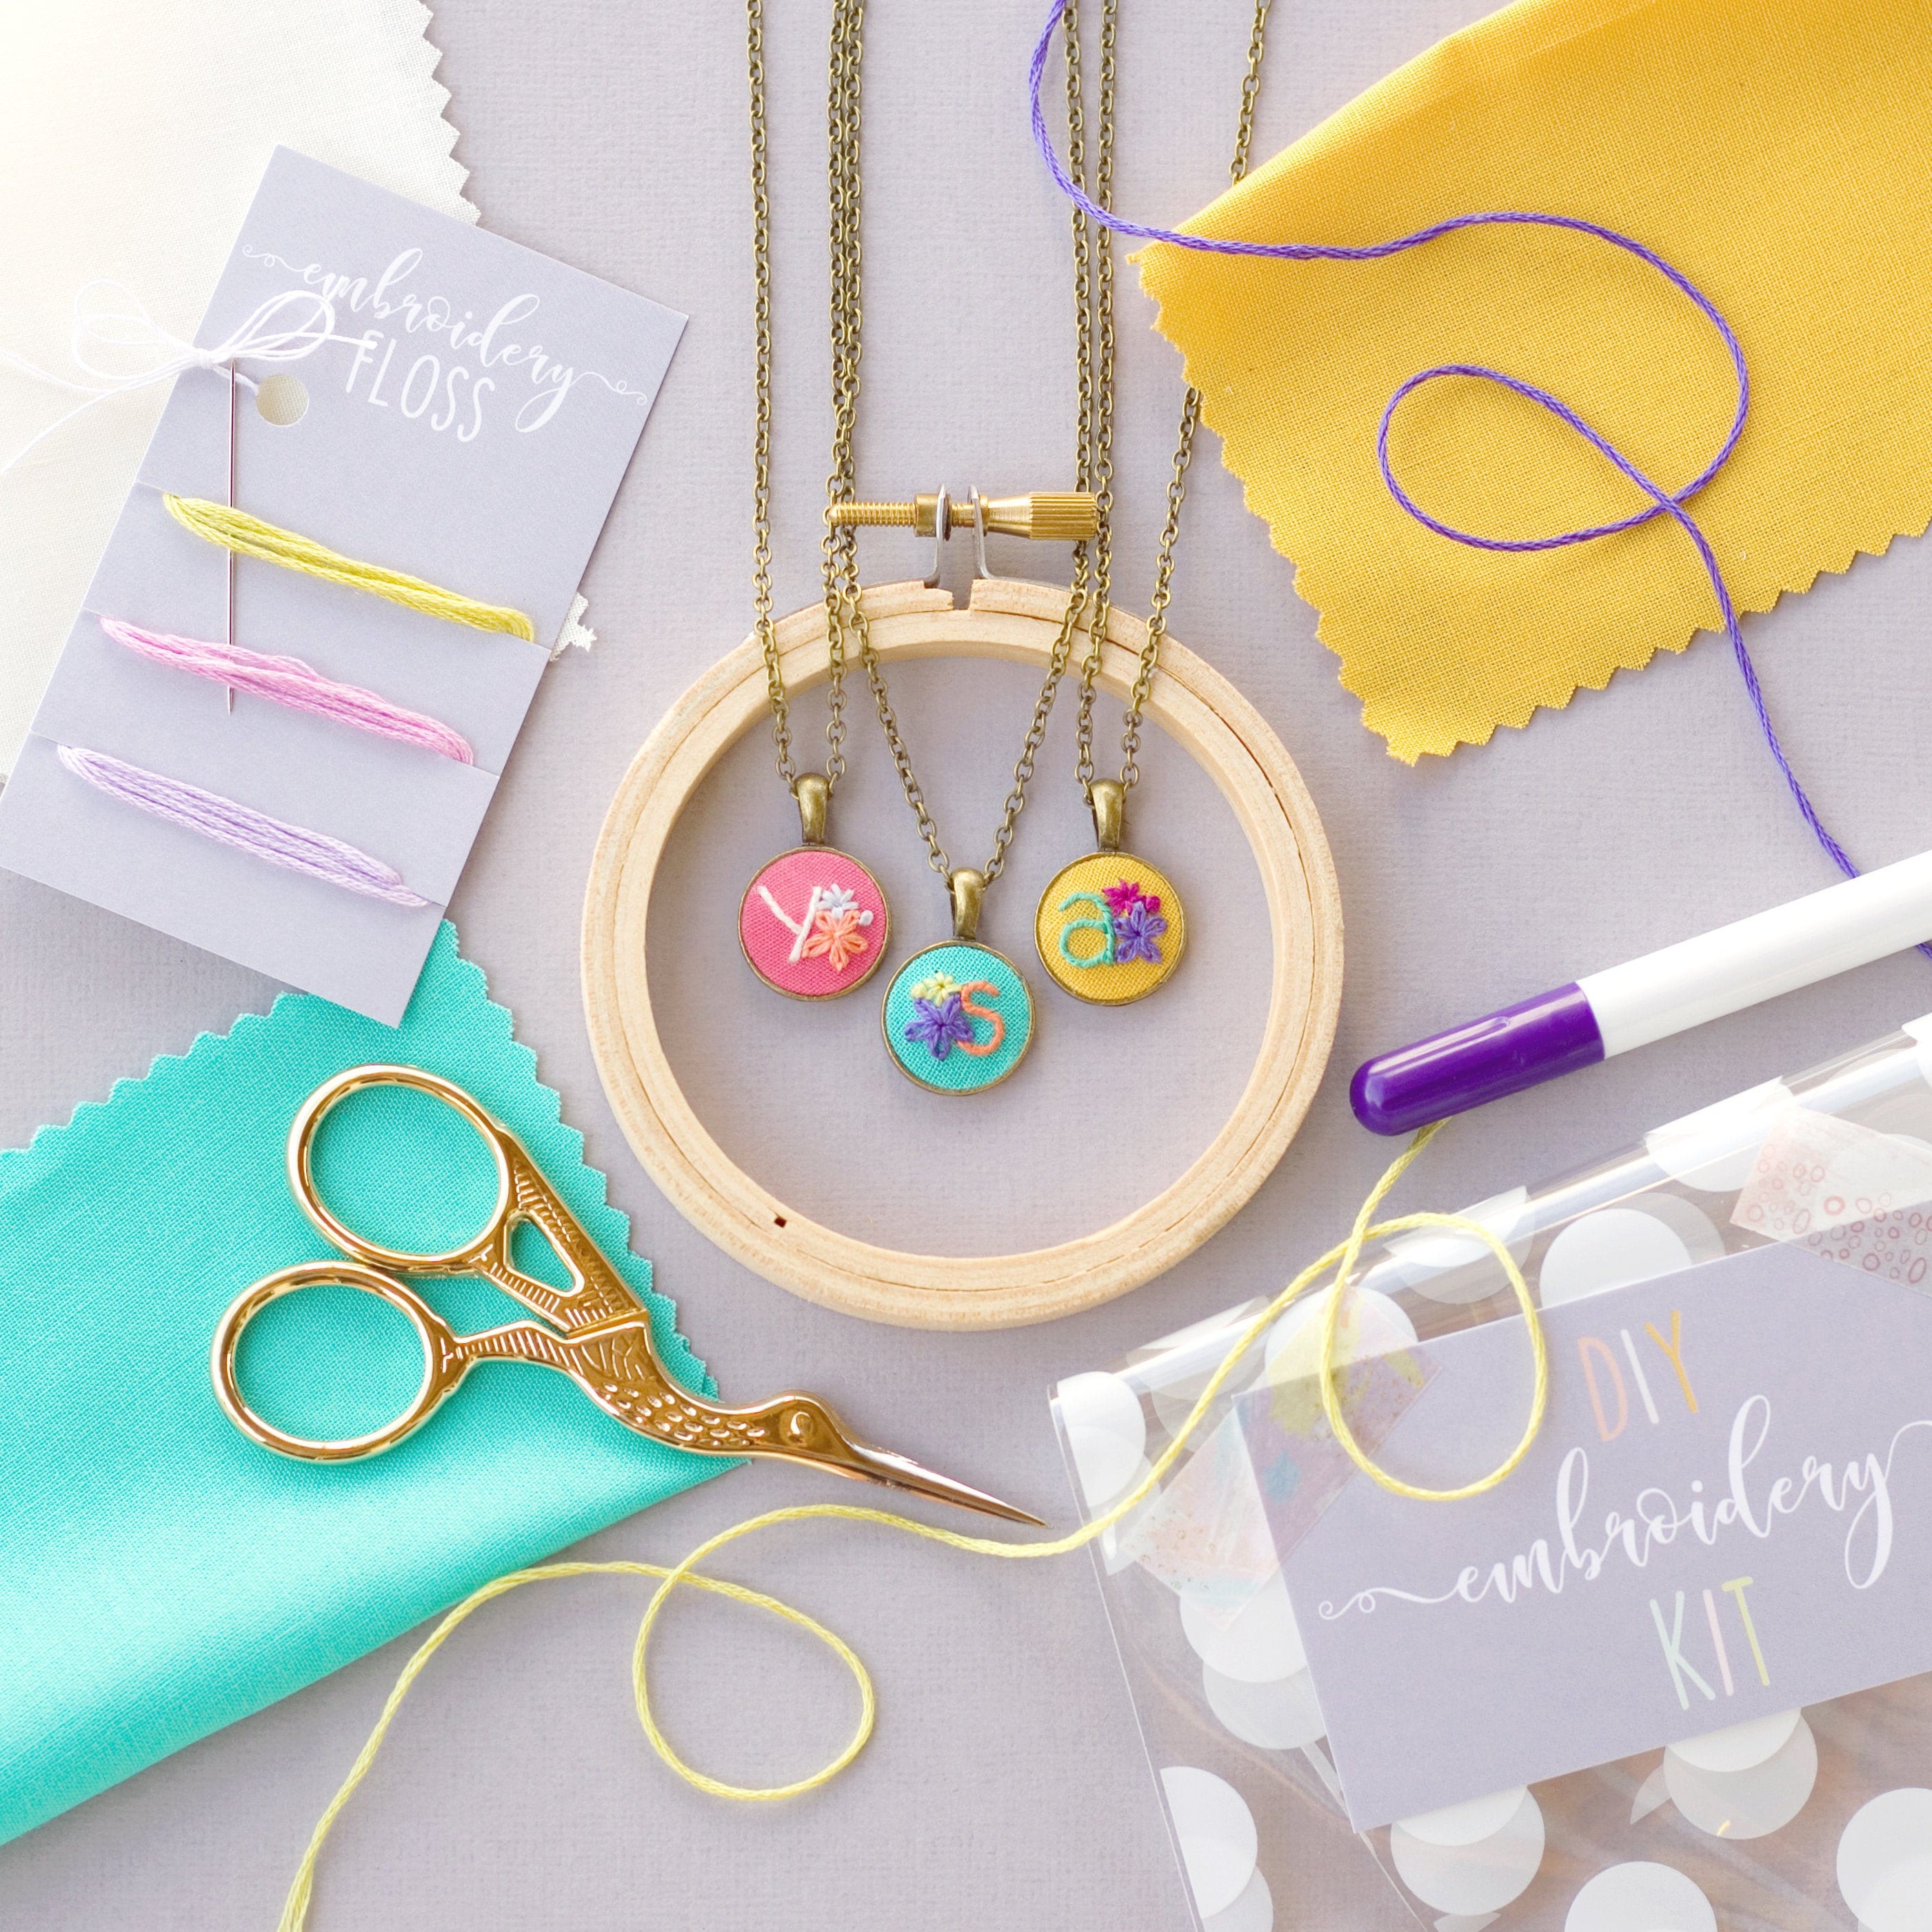 Full DIY Kit : Wire Wrap Pendant Tutorial, DIY Kits for Adults, Jewelry  Making Kit, Diy Jewelry Making, DIY Necklace Kit, Wire Wrap Tutorial 